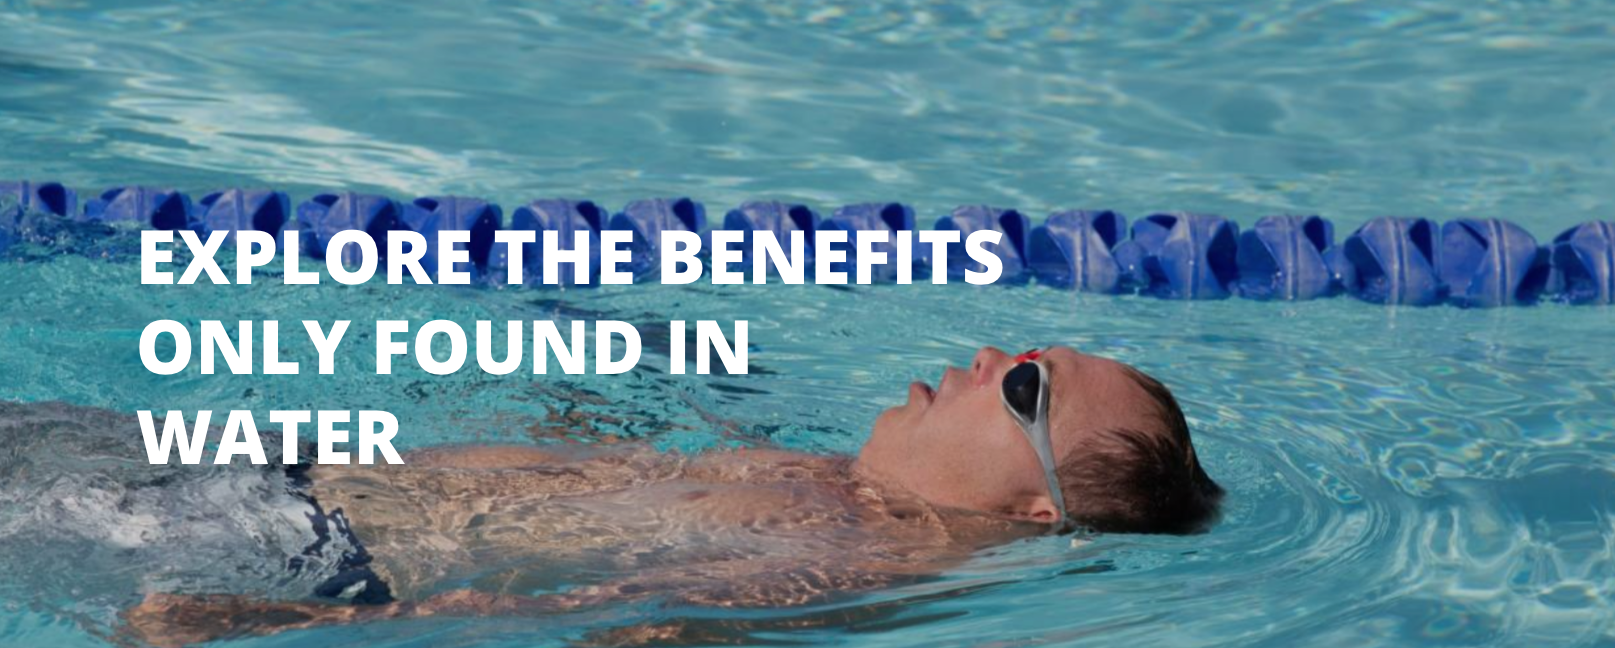 swimming benefits image